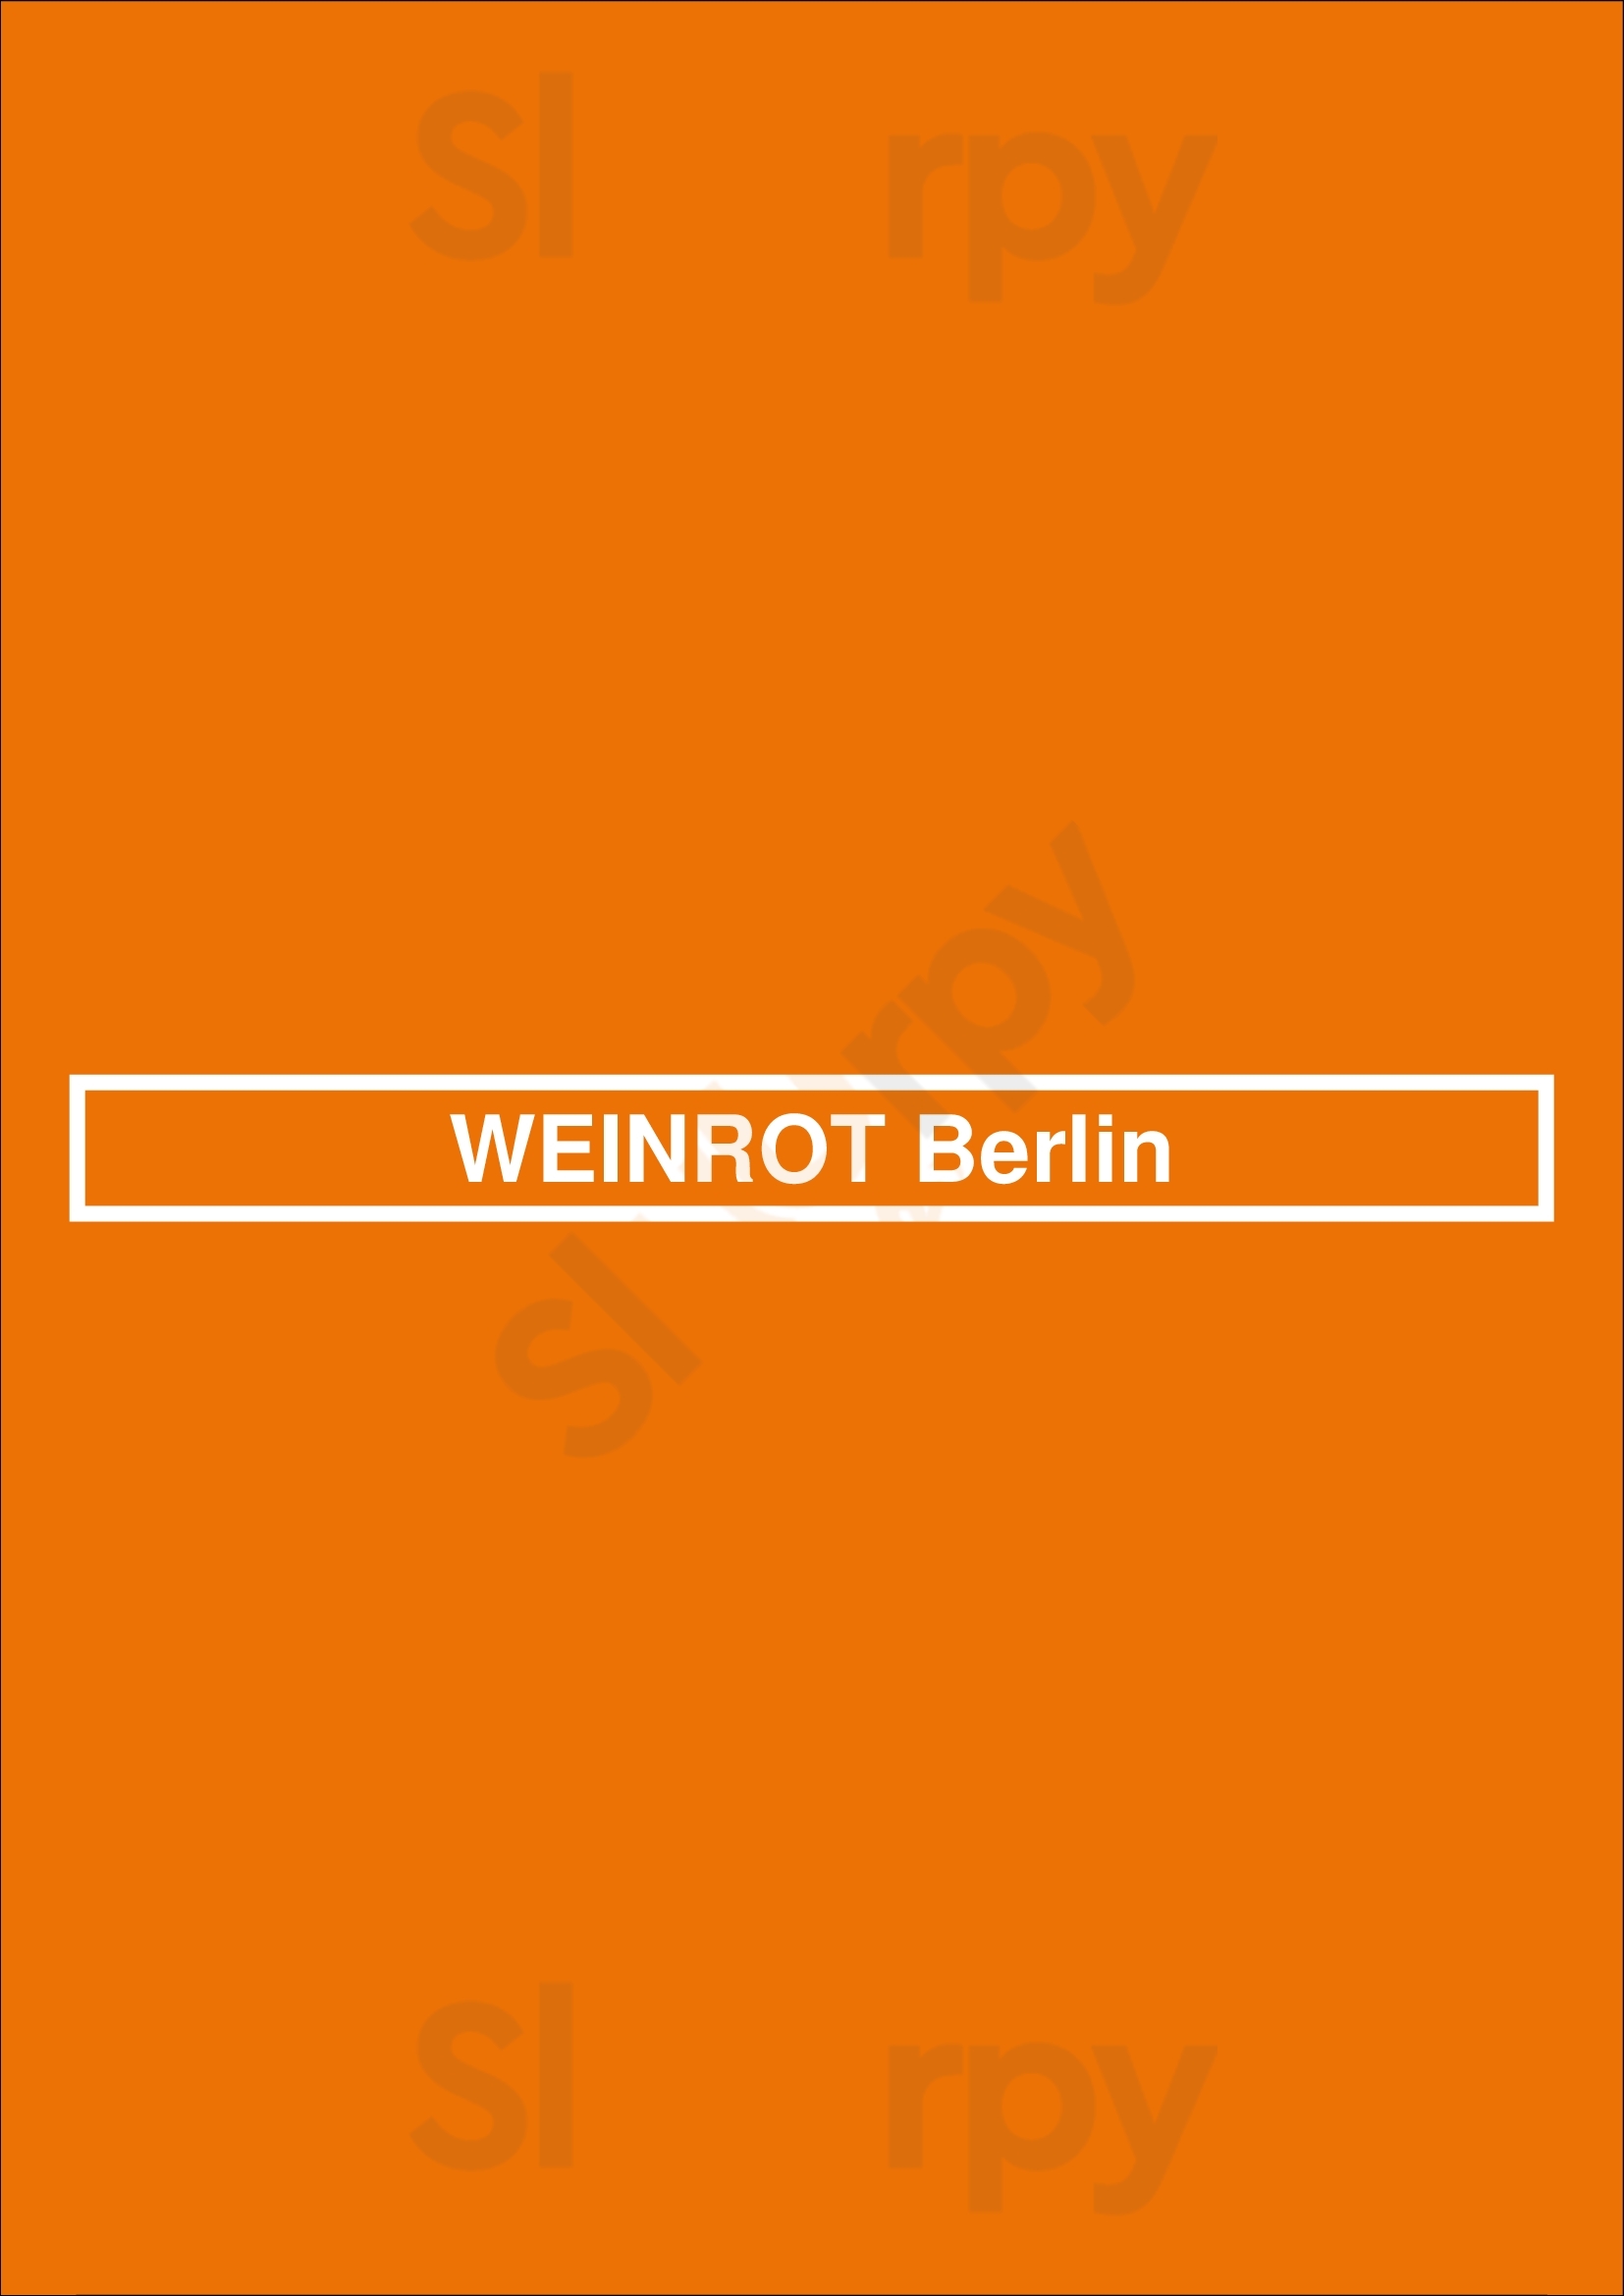 Weinrot Berlin Berlin Menu - 1